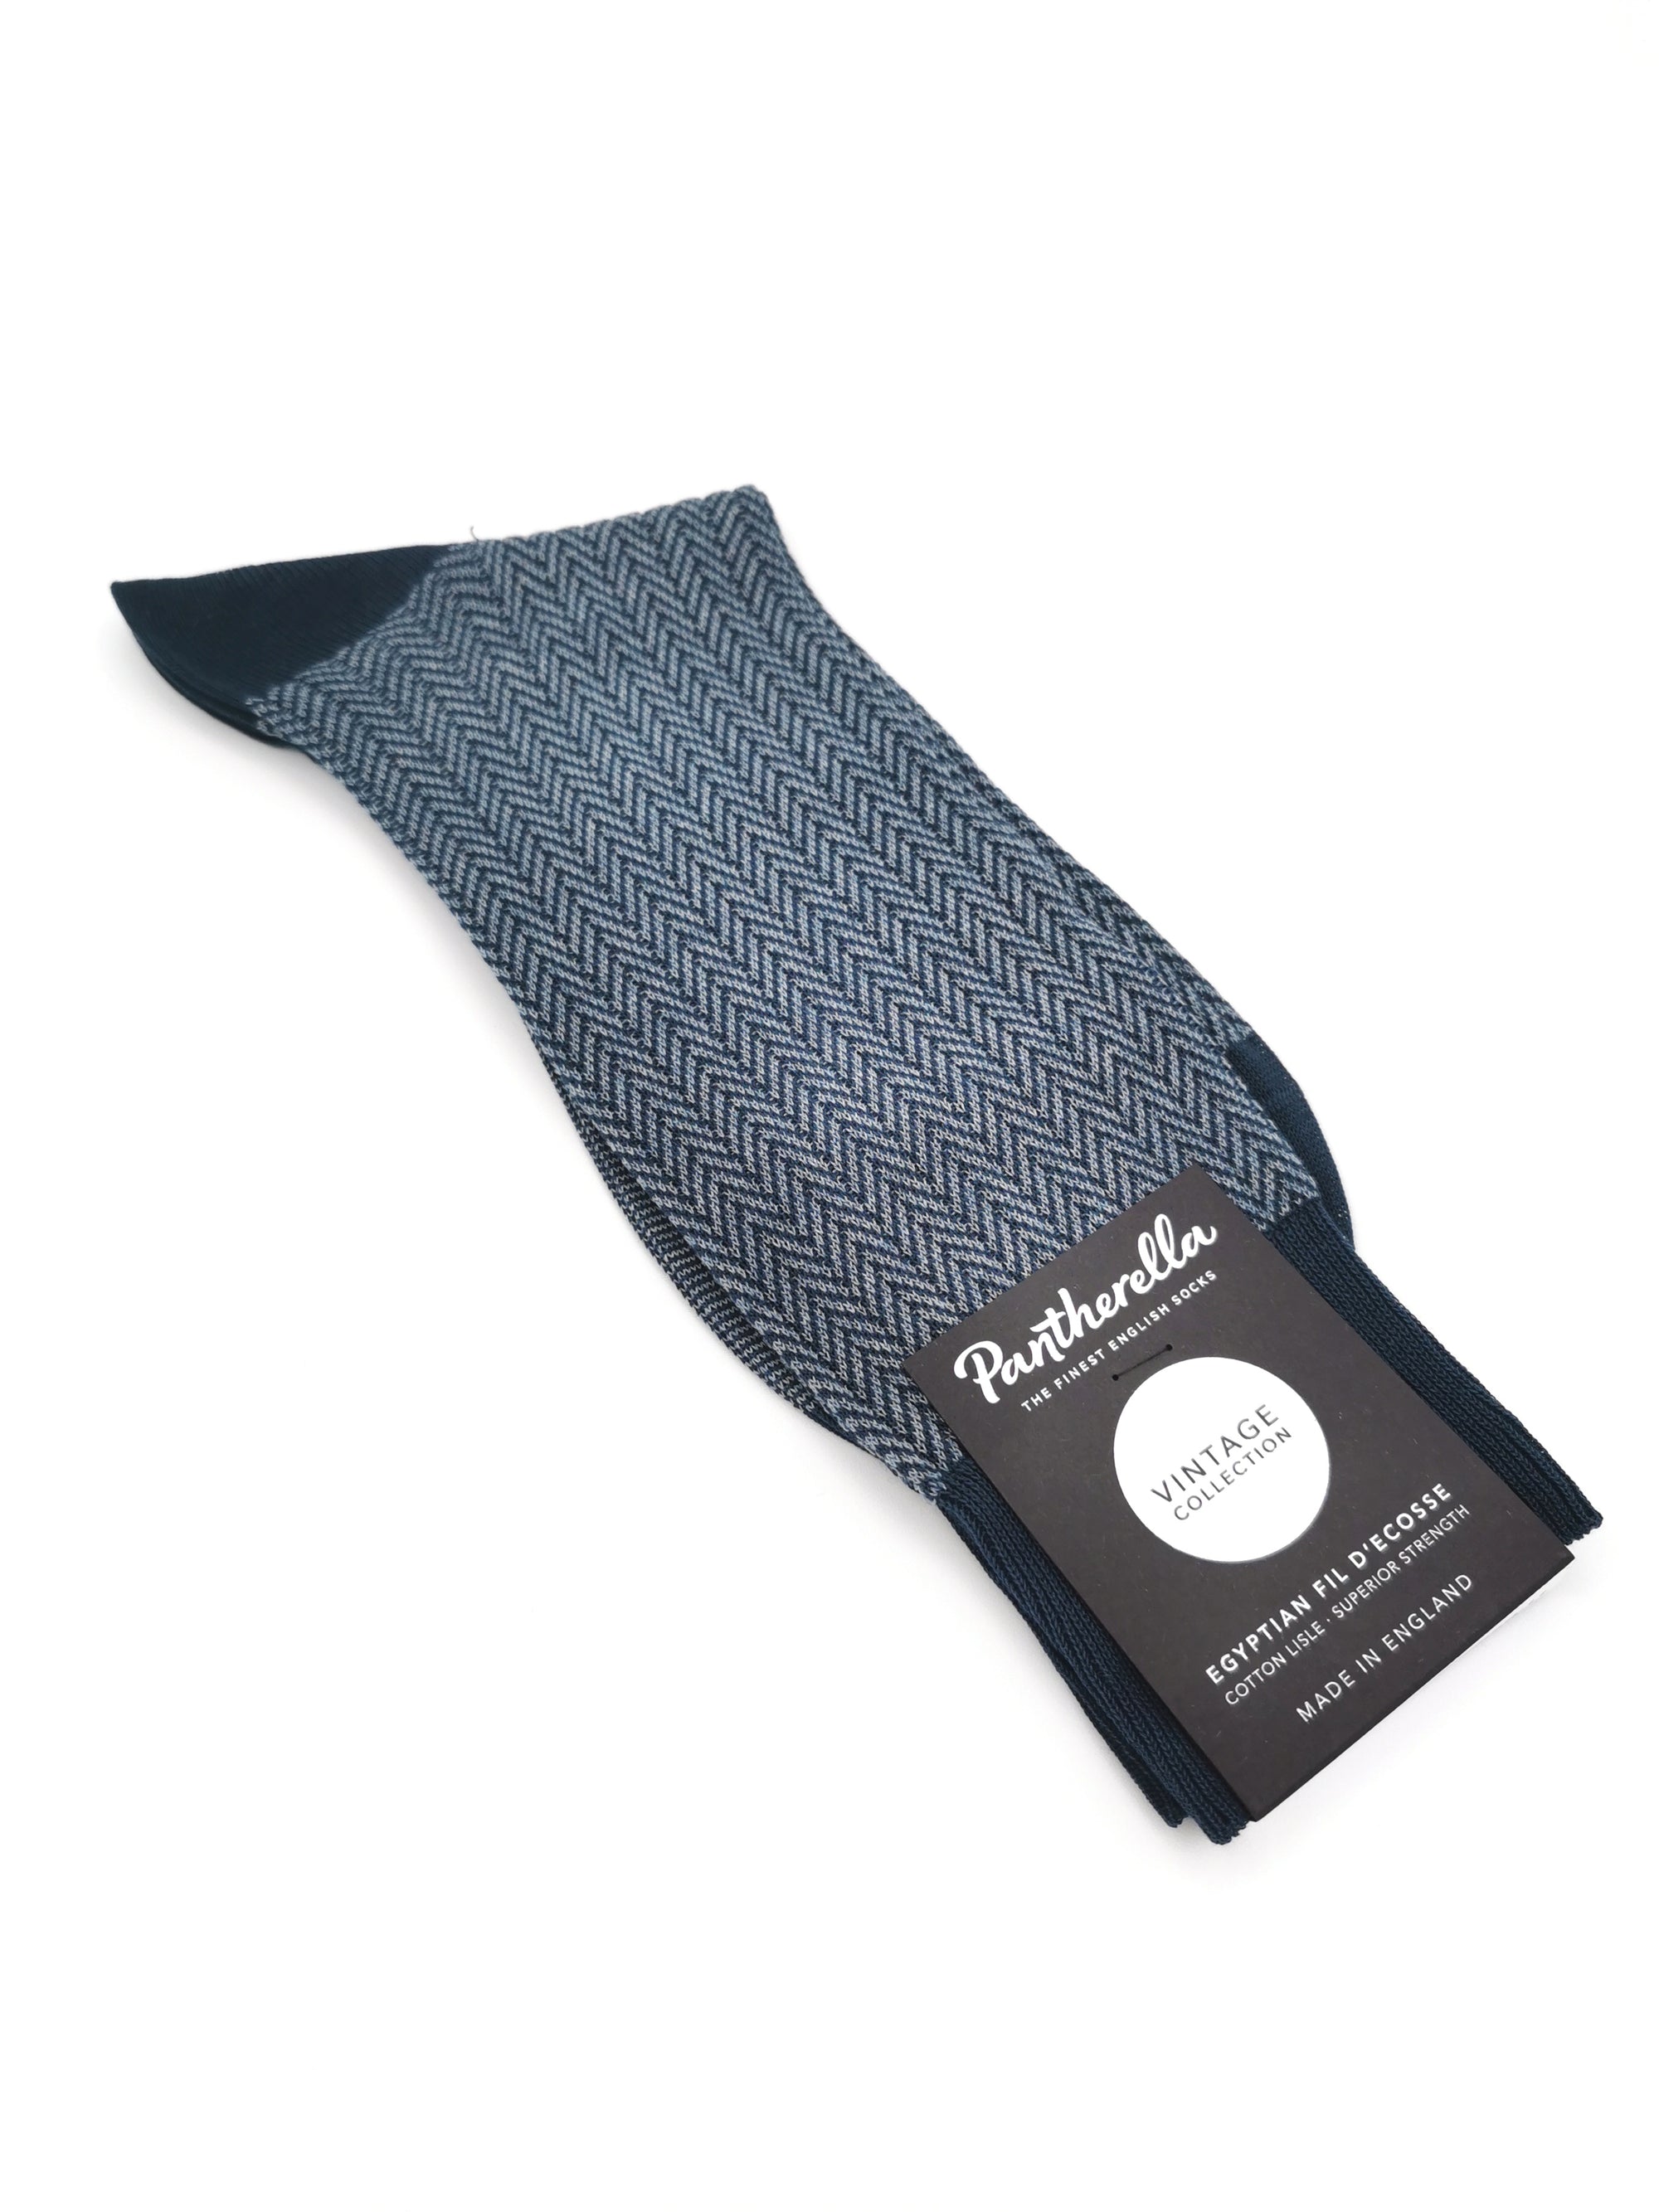 Pantherella socks in lisle herringbone pattern